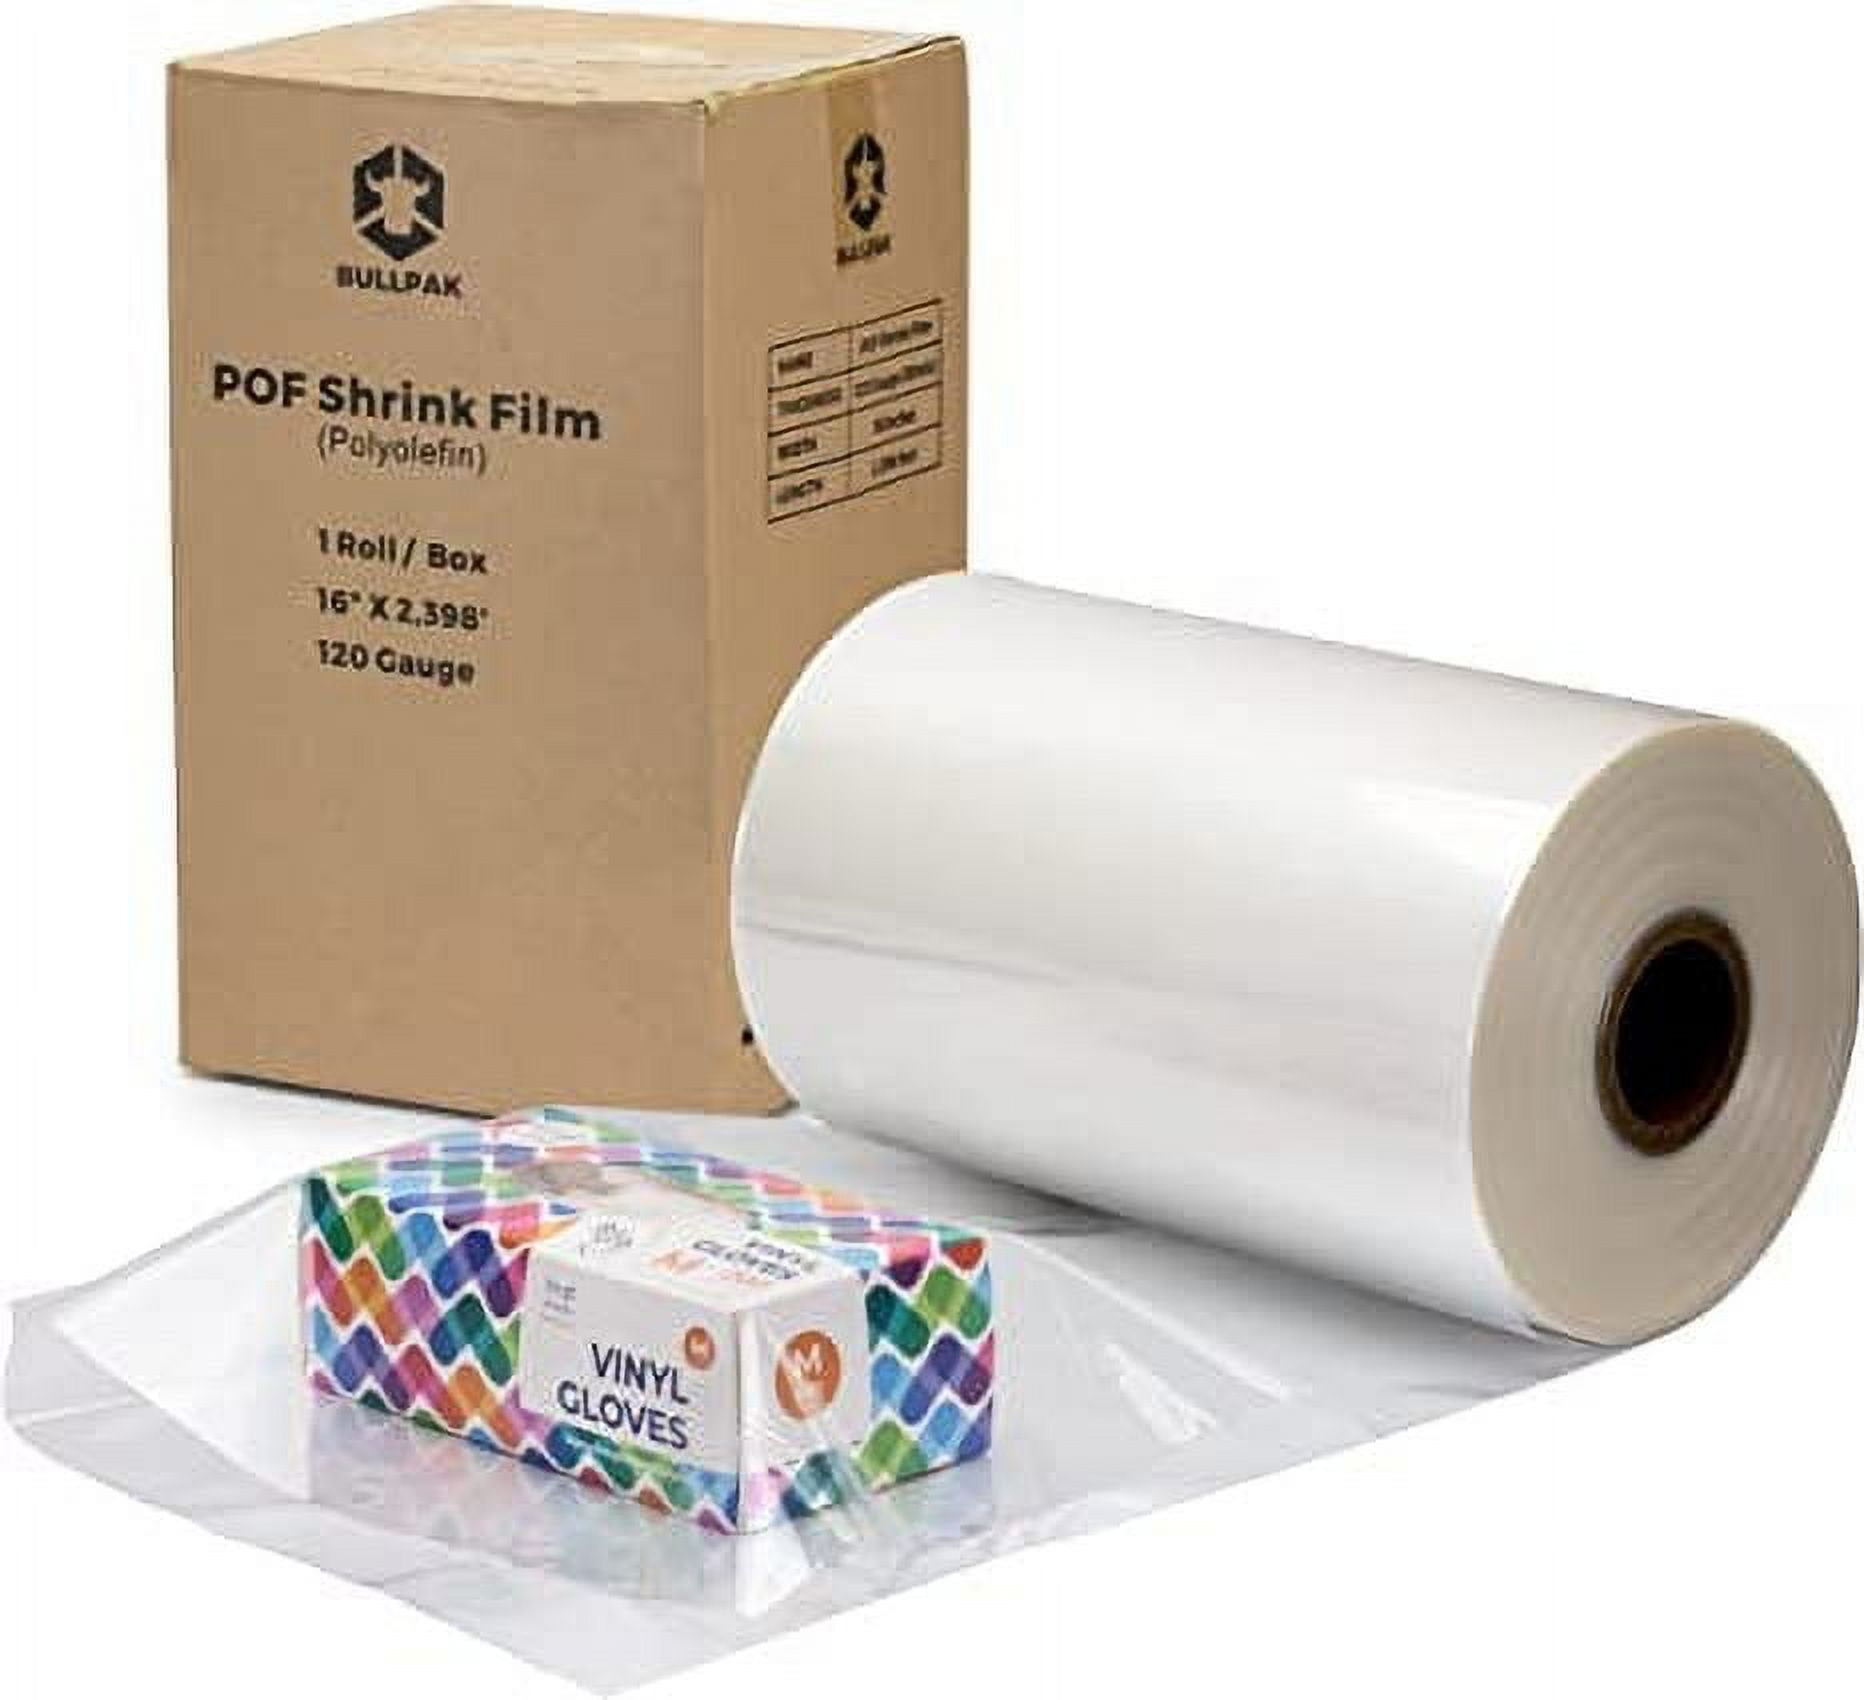 16mm Heavy Duty Polystyrene Plastic Film Reels – Welcome to